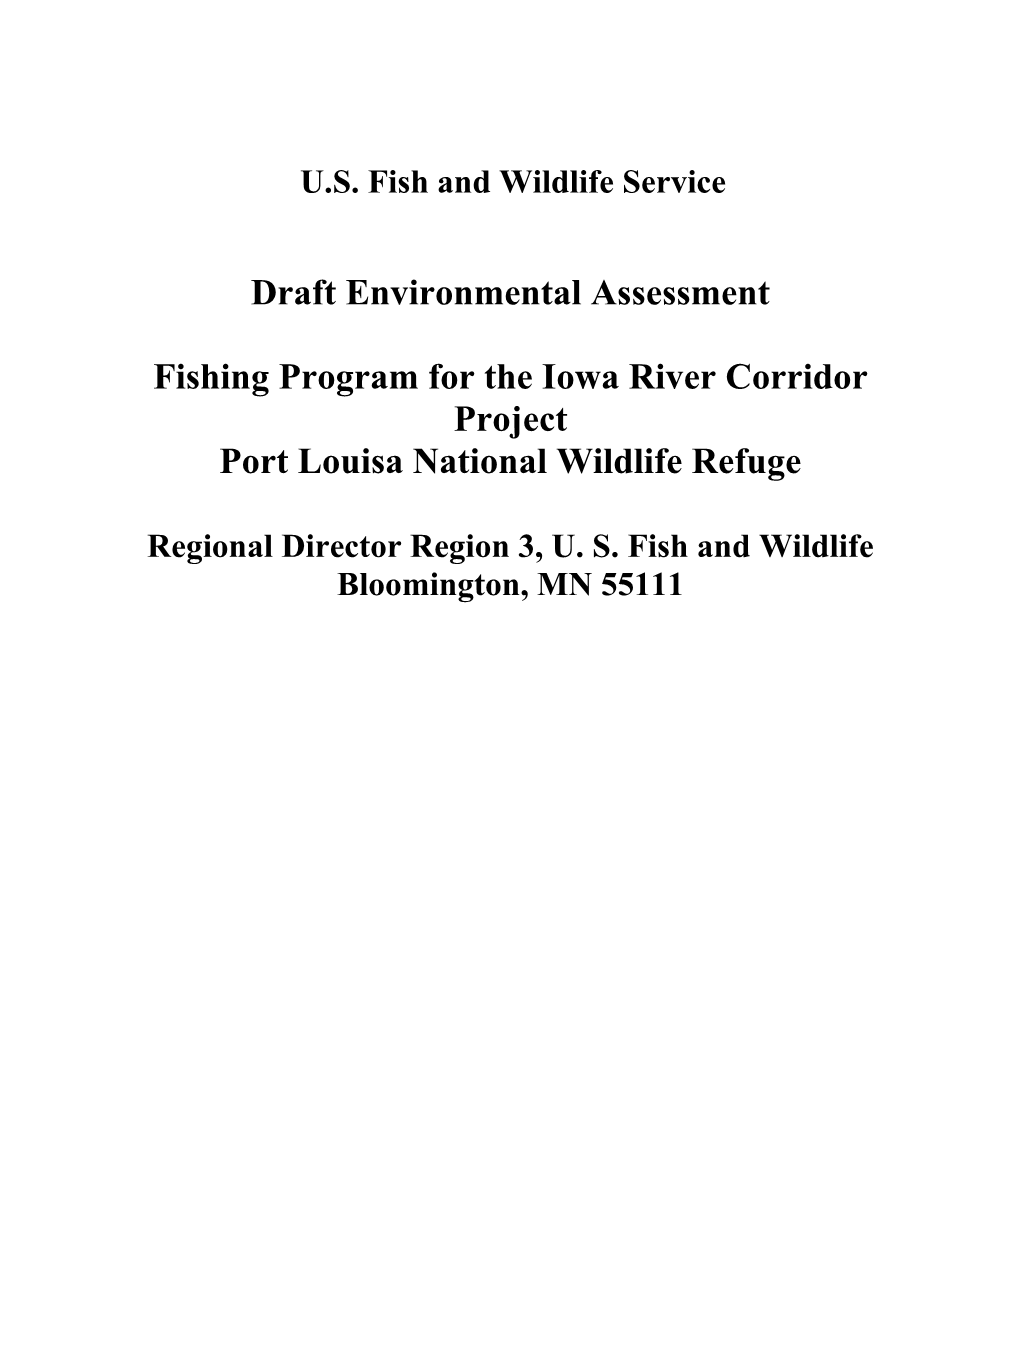 Draft Environmental Assessment Fishing Program for the Iowa River